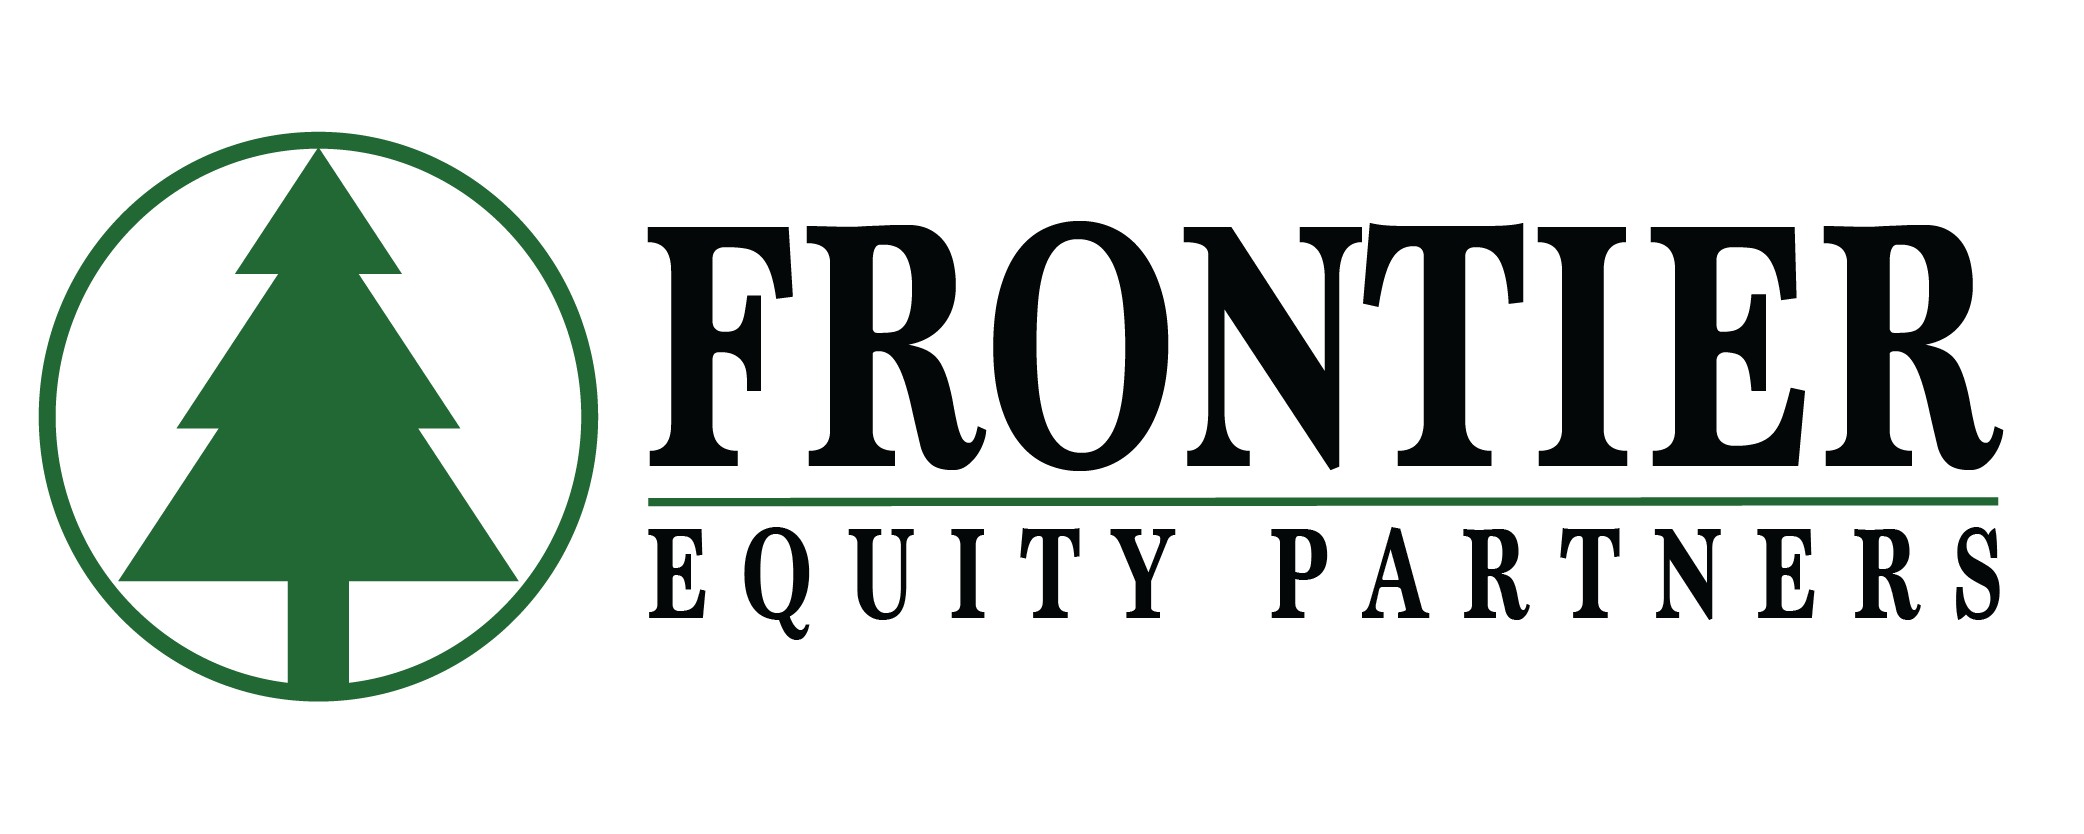 Frontier Equity Partners Logo